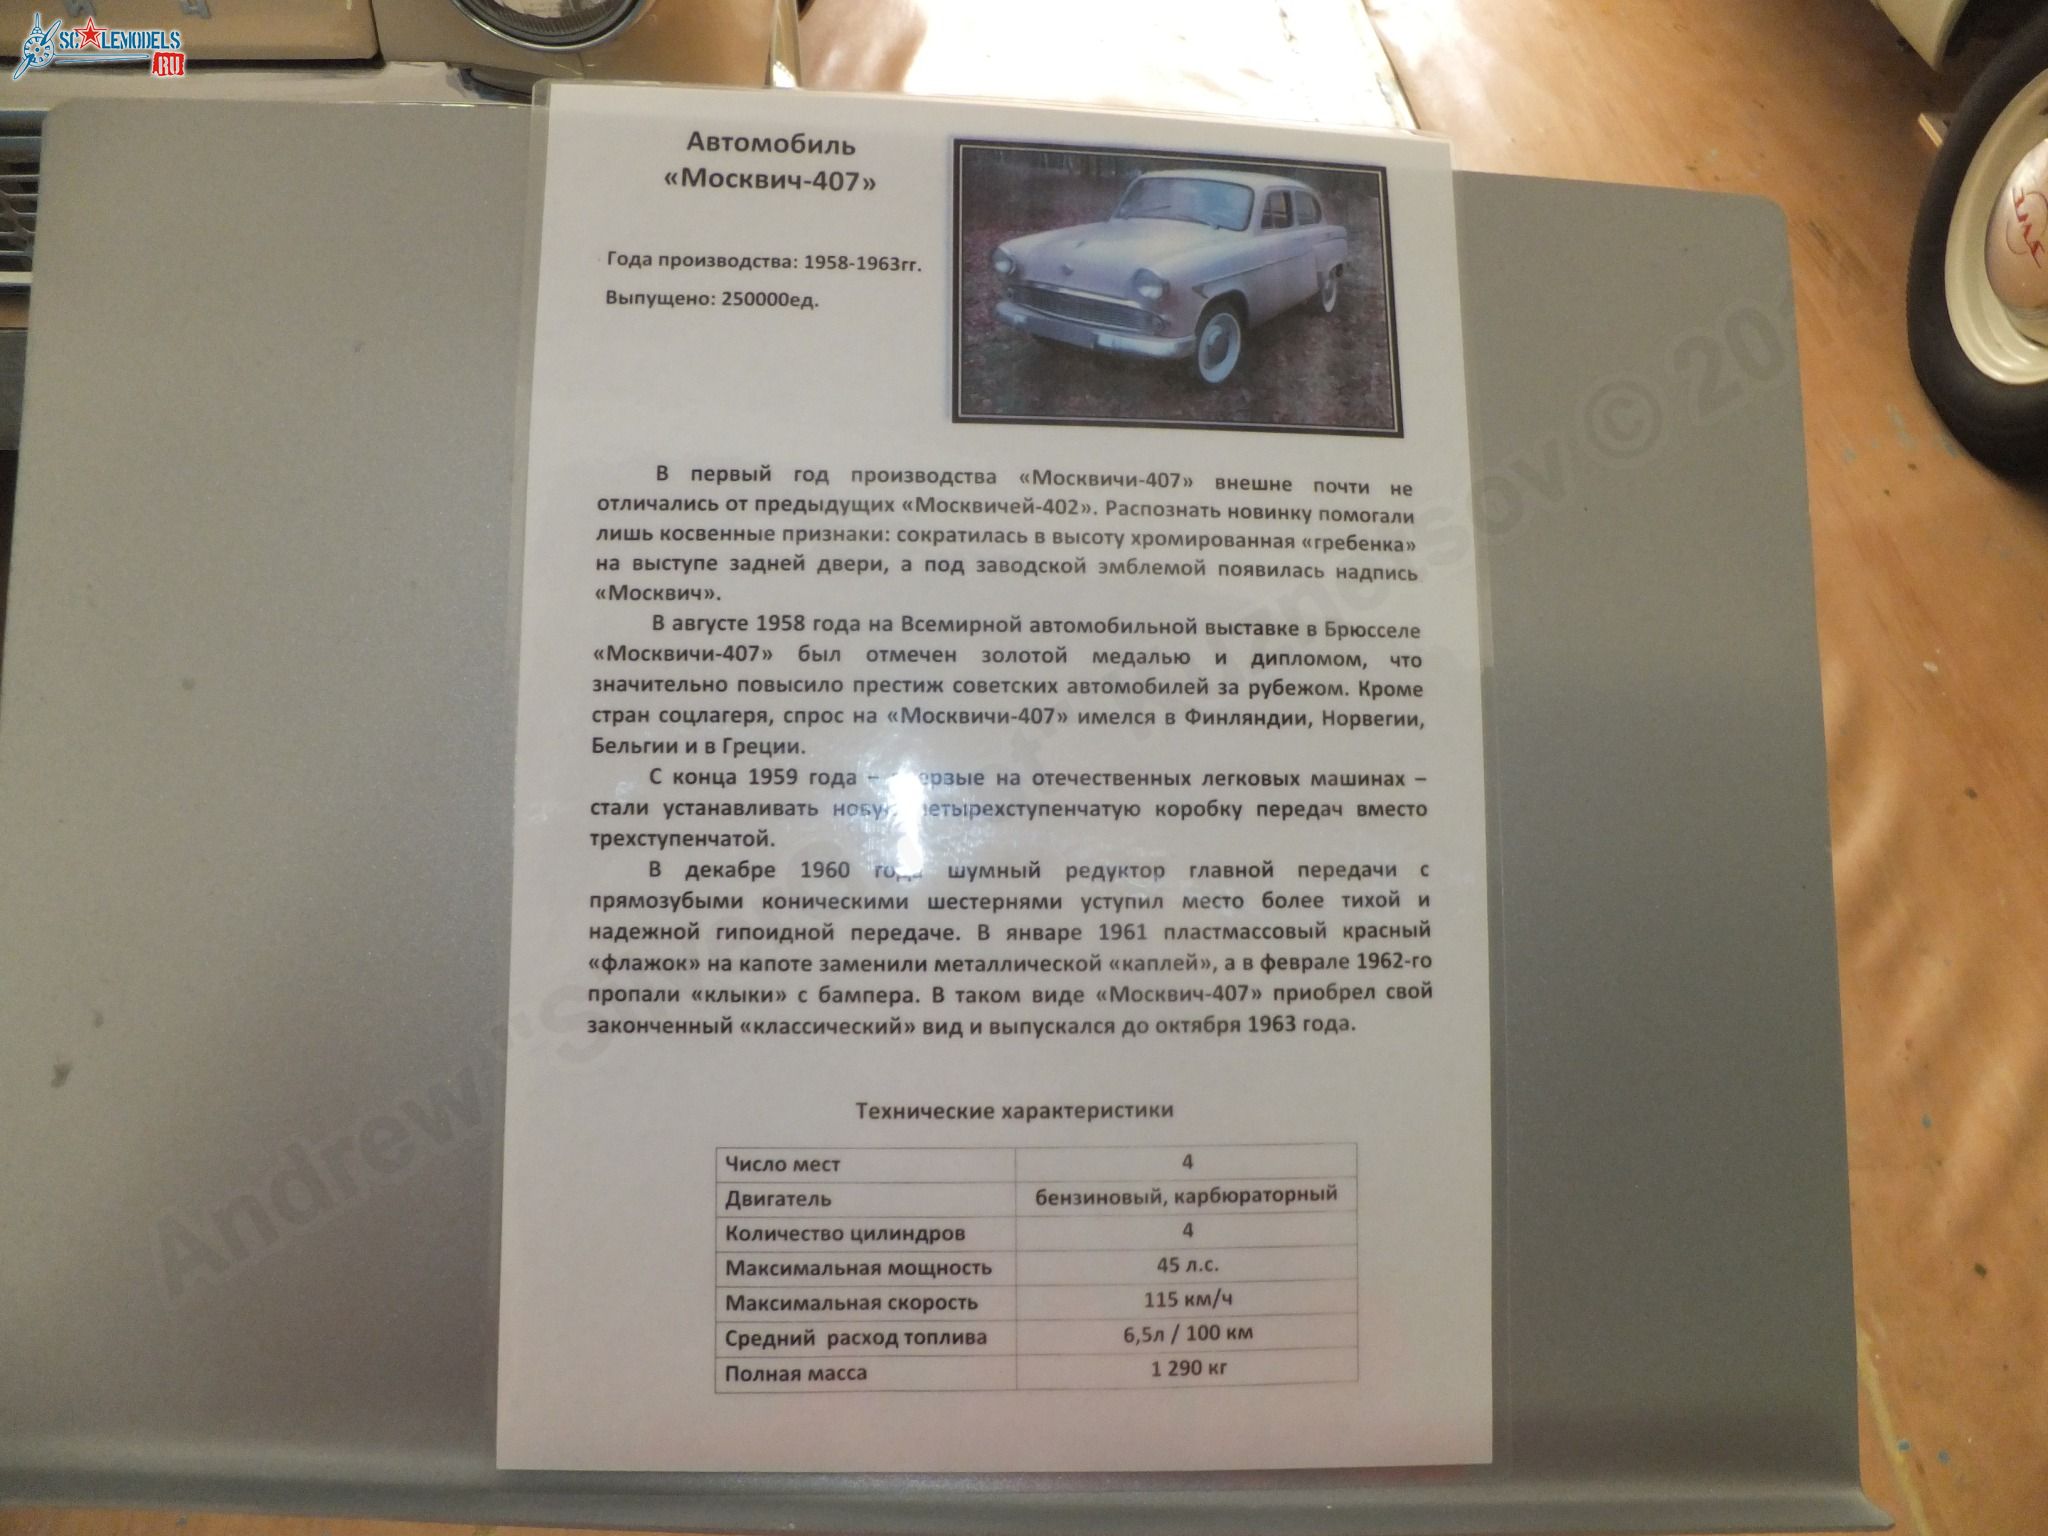 Chernogolovka_museum_auto_0161.jpg